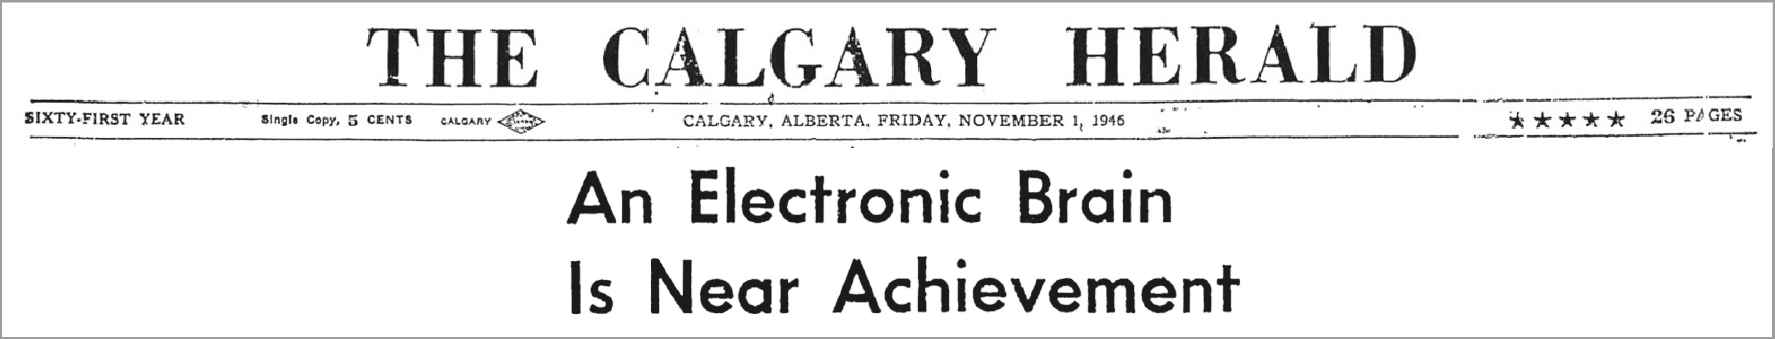 Manchete de jornal. Em preto e branco. Título em inglês: The Calgary Herald. Texto na parte inferior: An Electronic Brain Is Near Achievement.